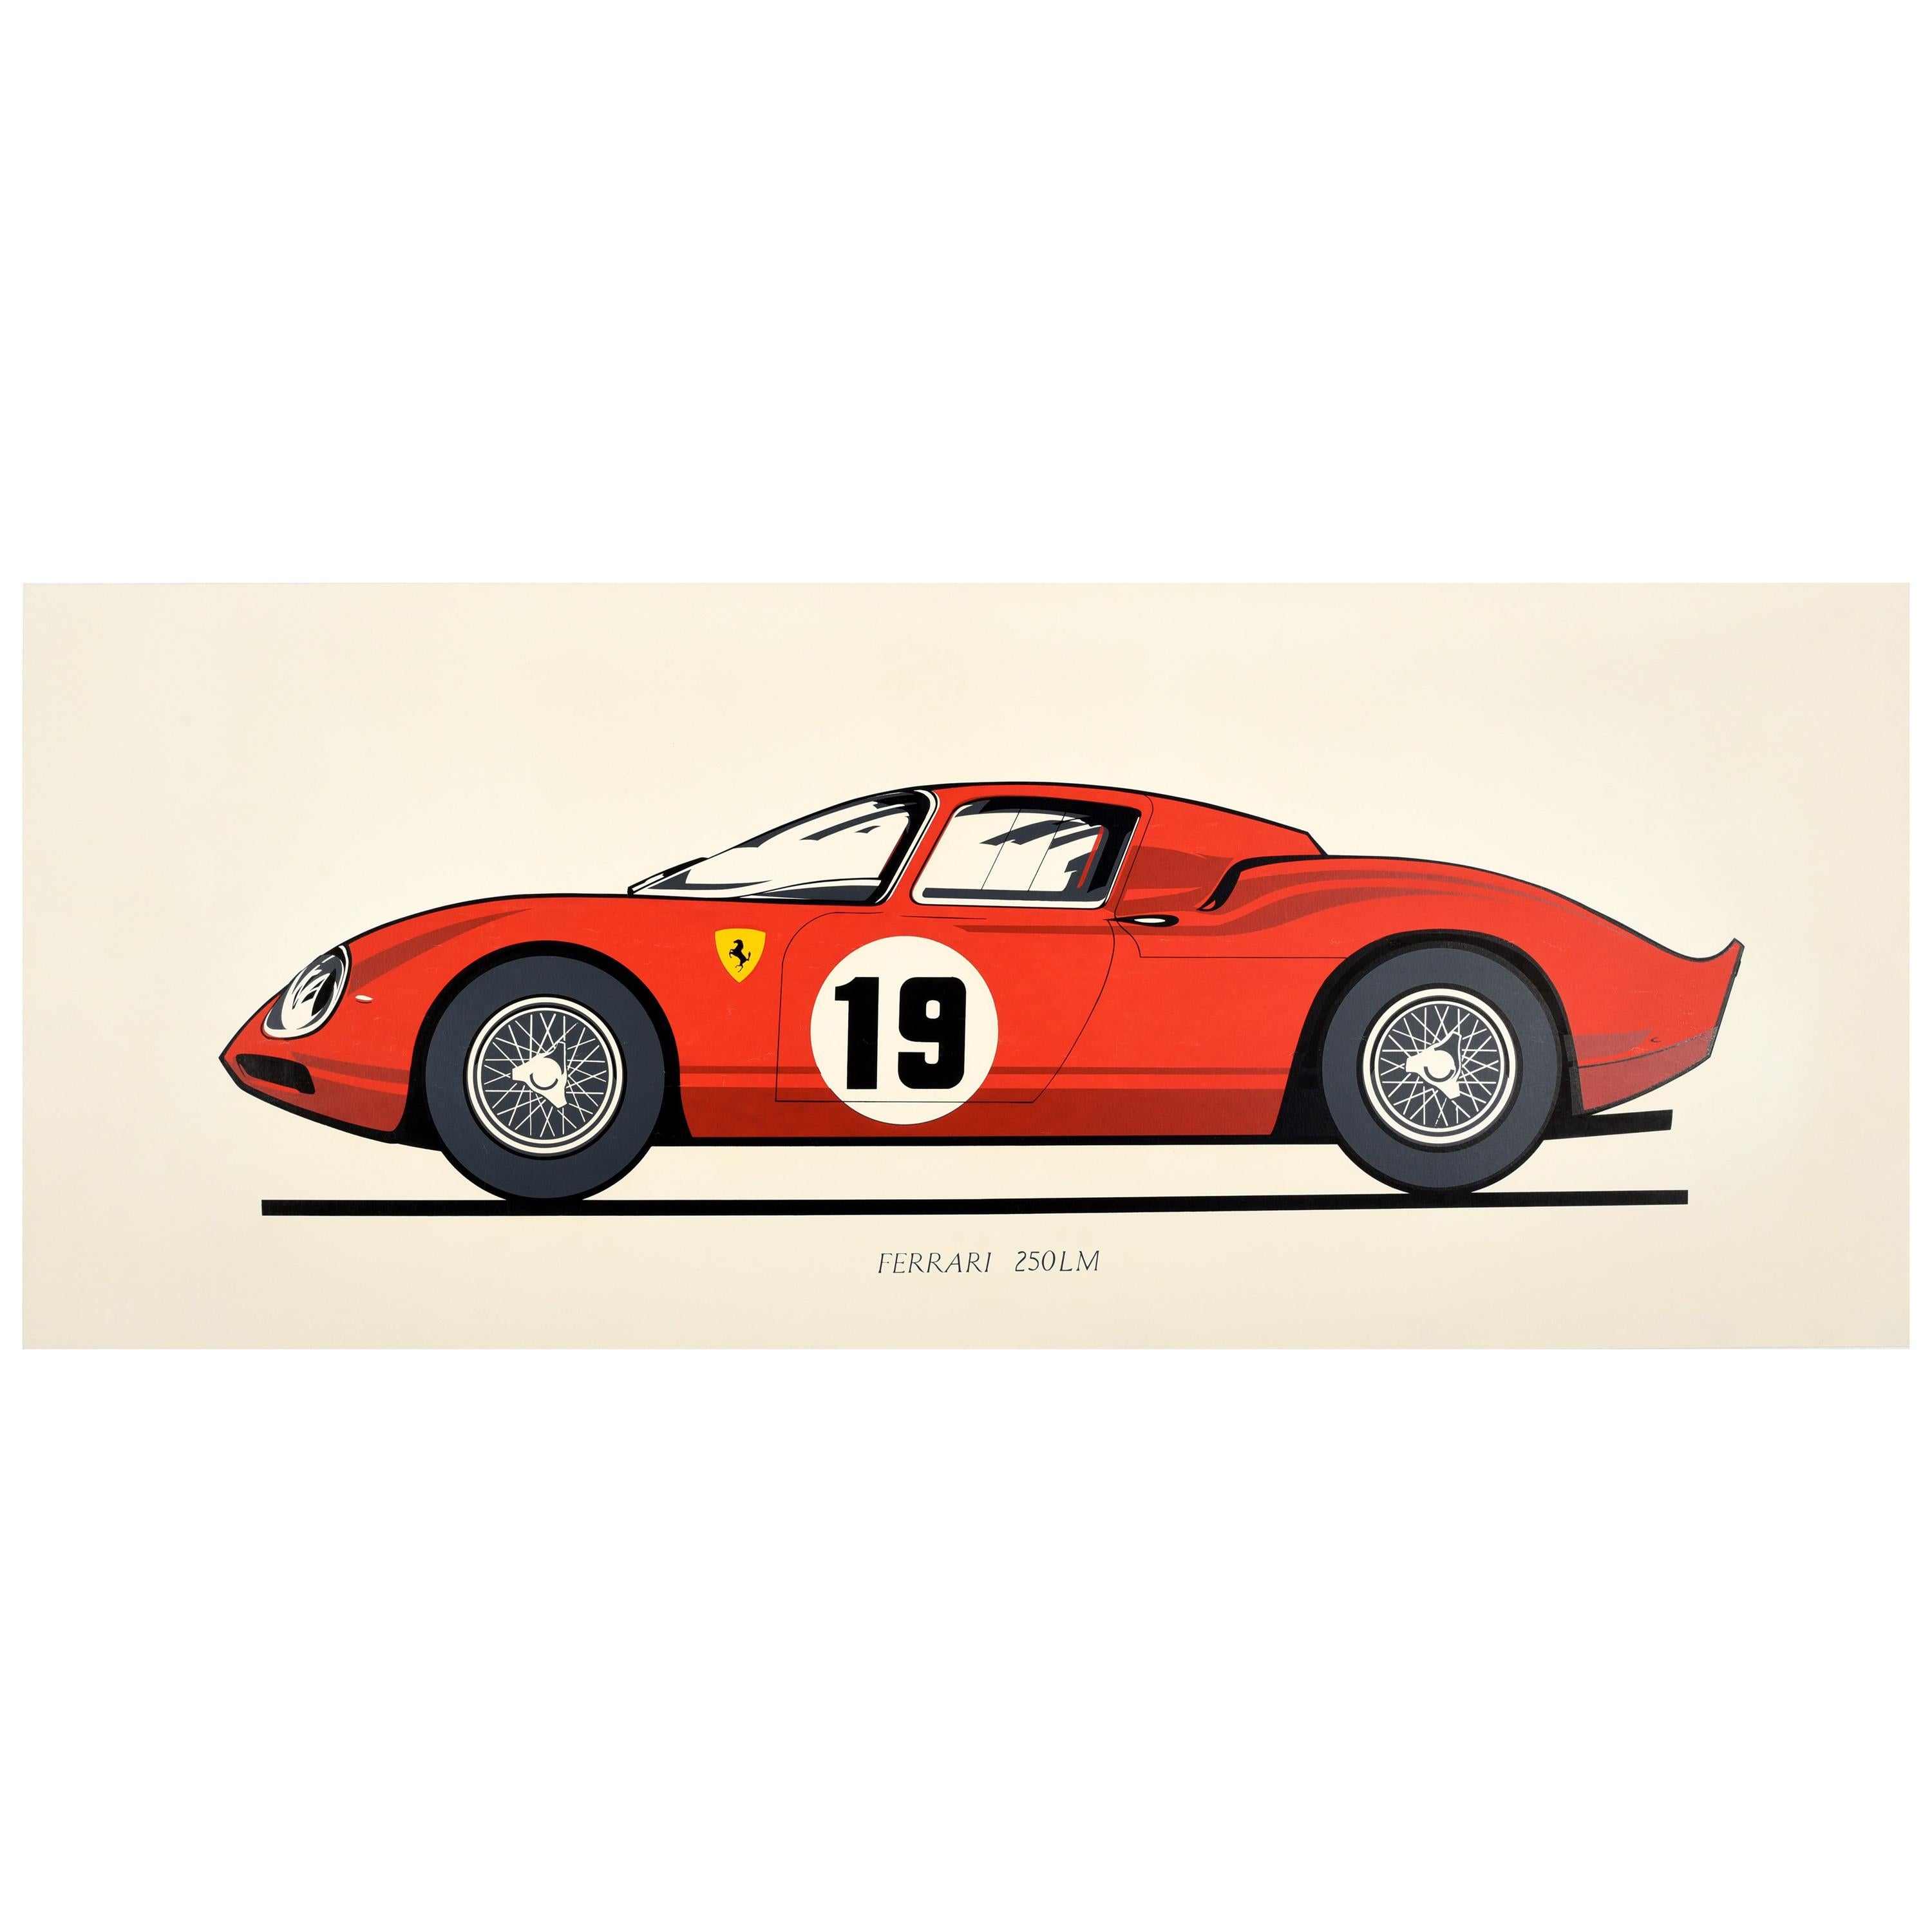 Original Vintage Ferrari 250LM Sports Car Advertising Poster Paris Motor Show